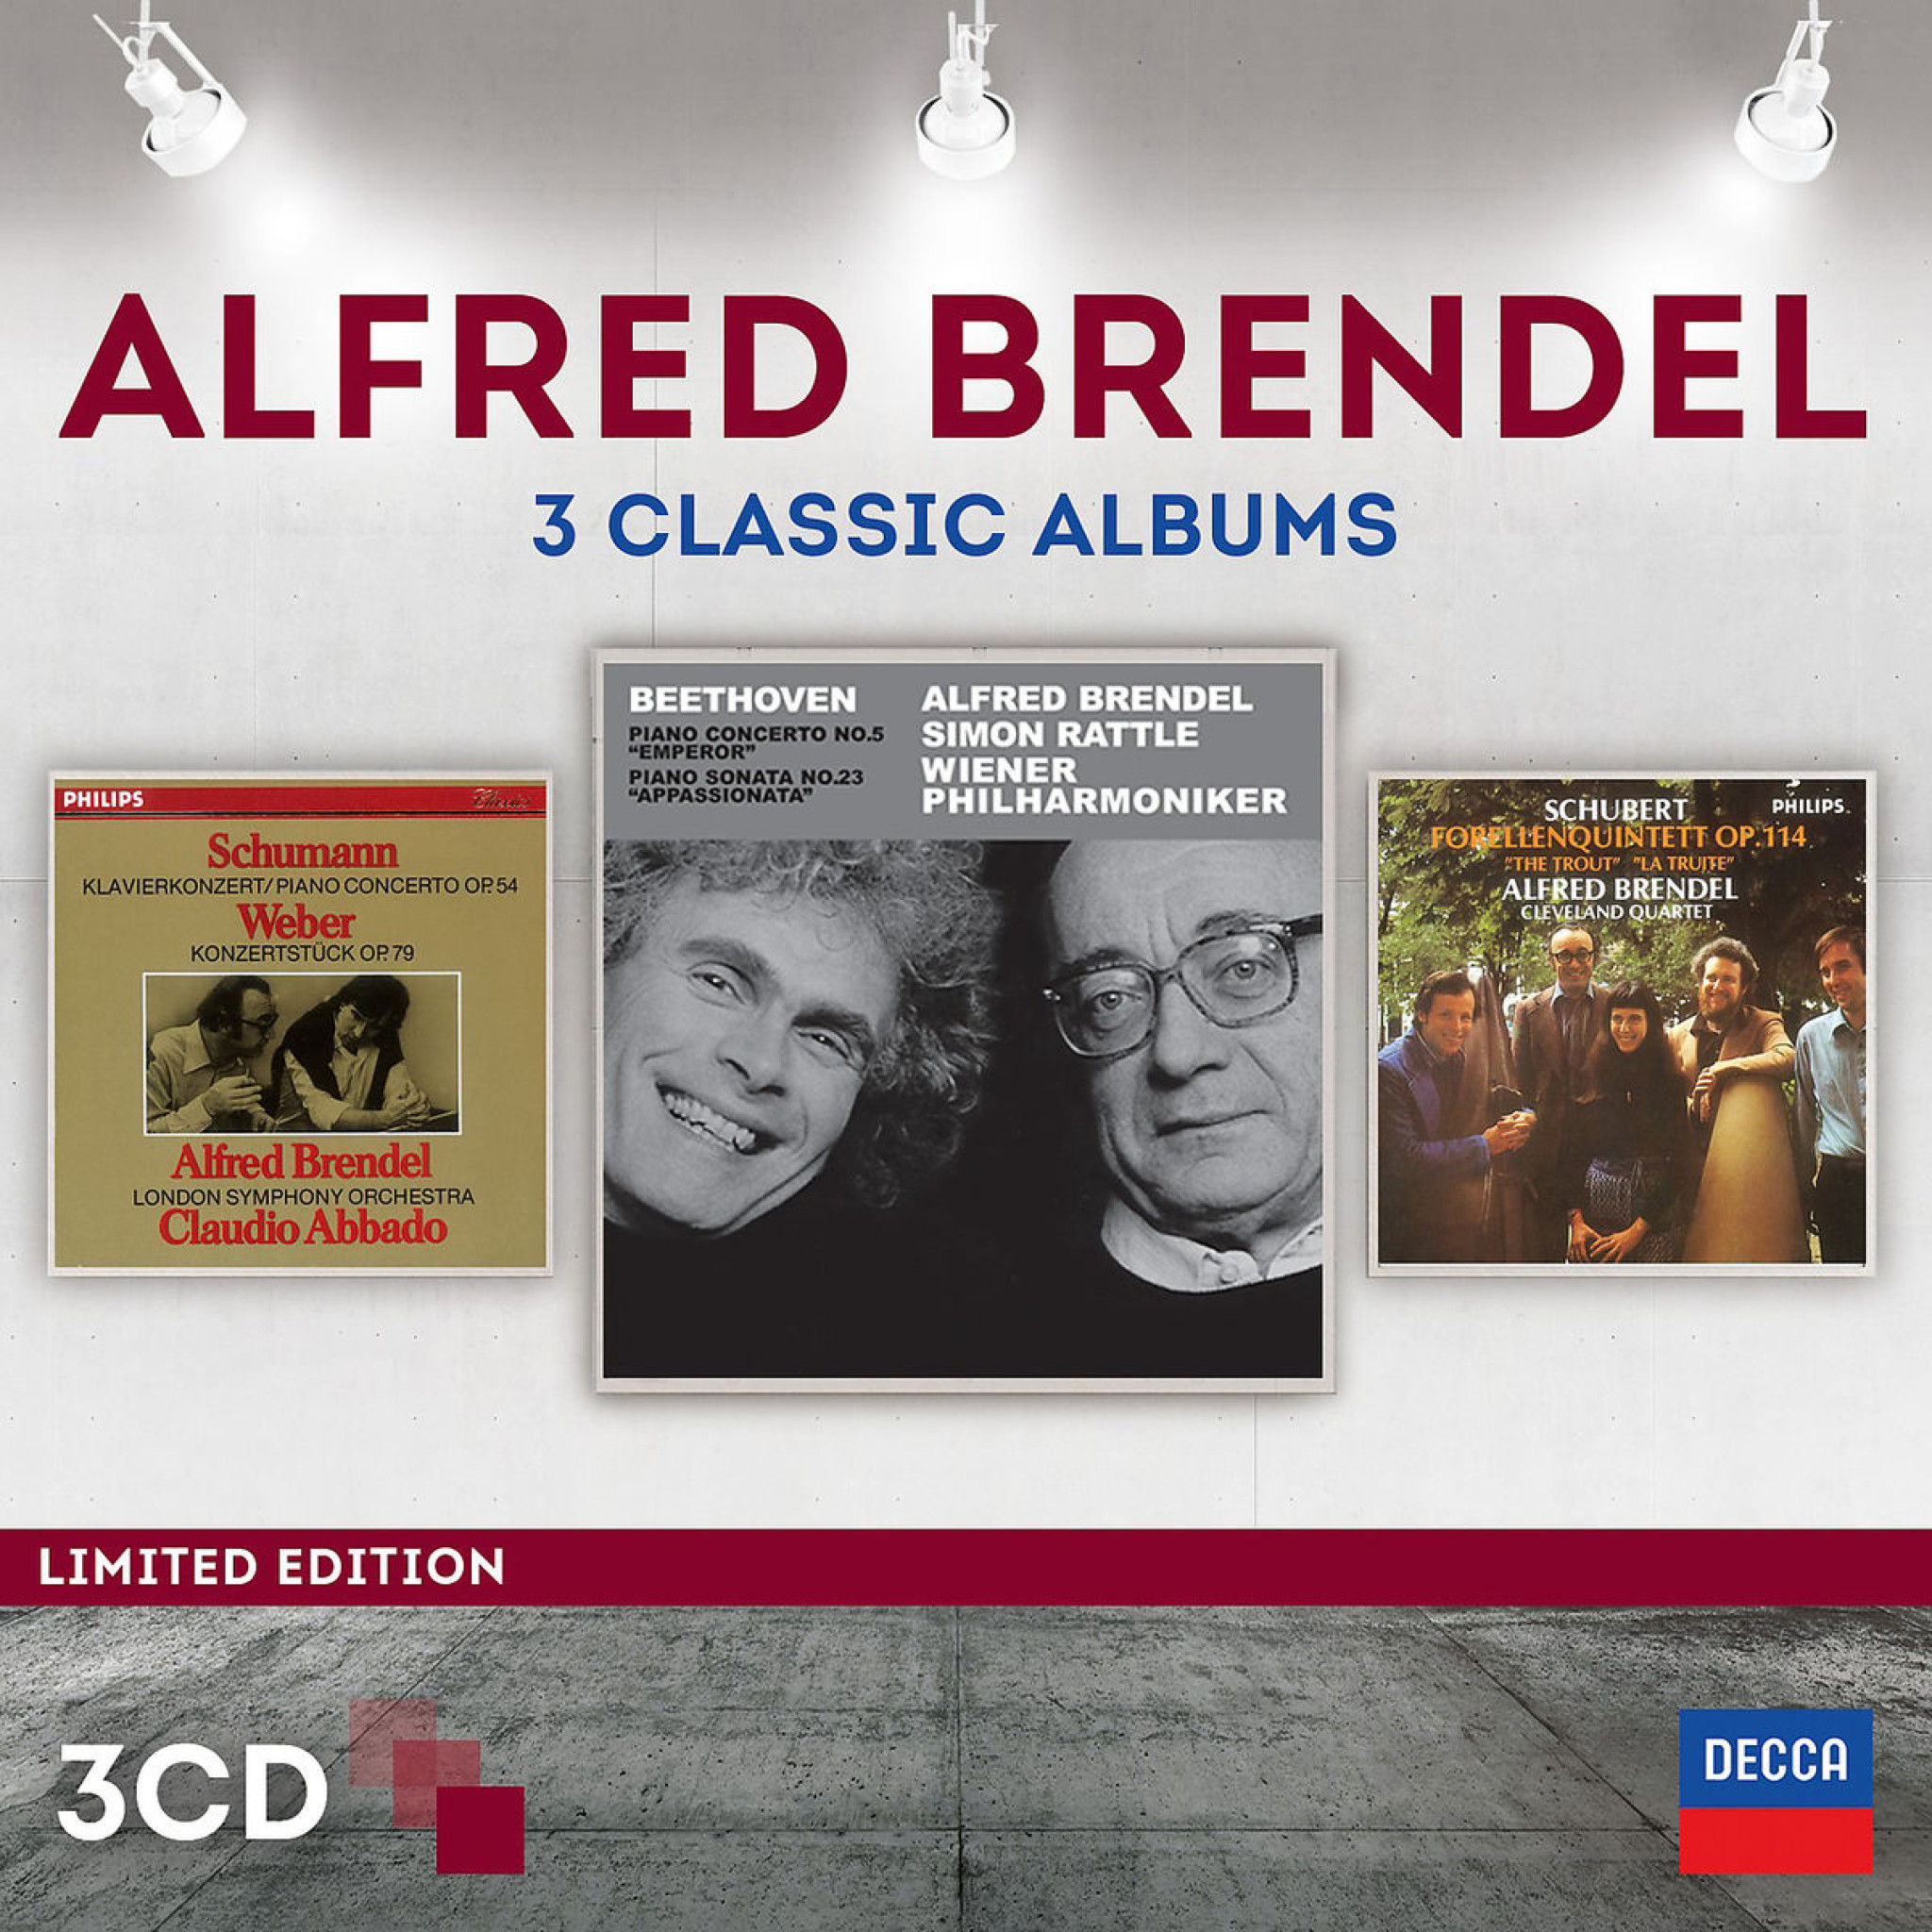 ALFRED BRENDEL